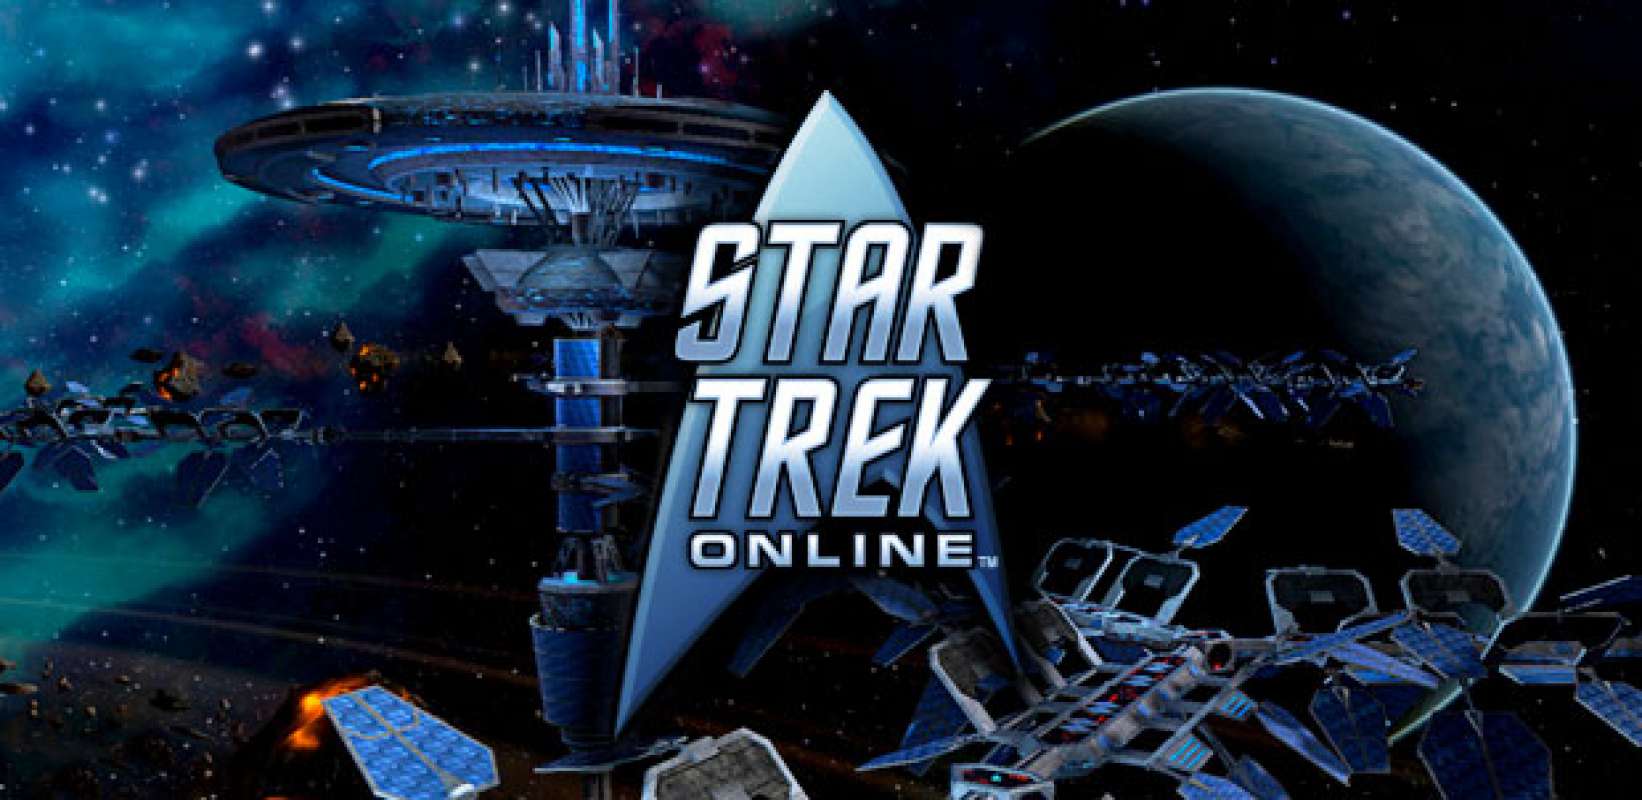 Star trek online release date